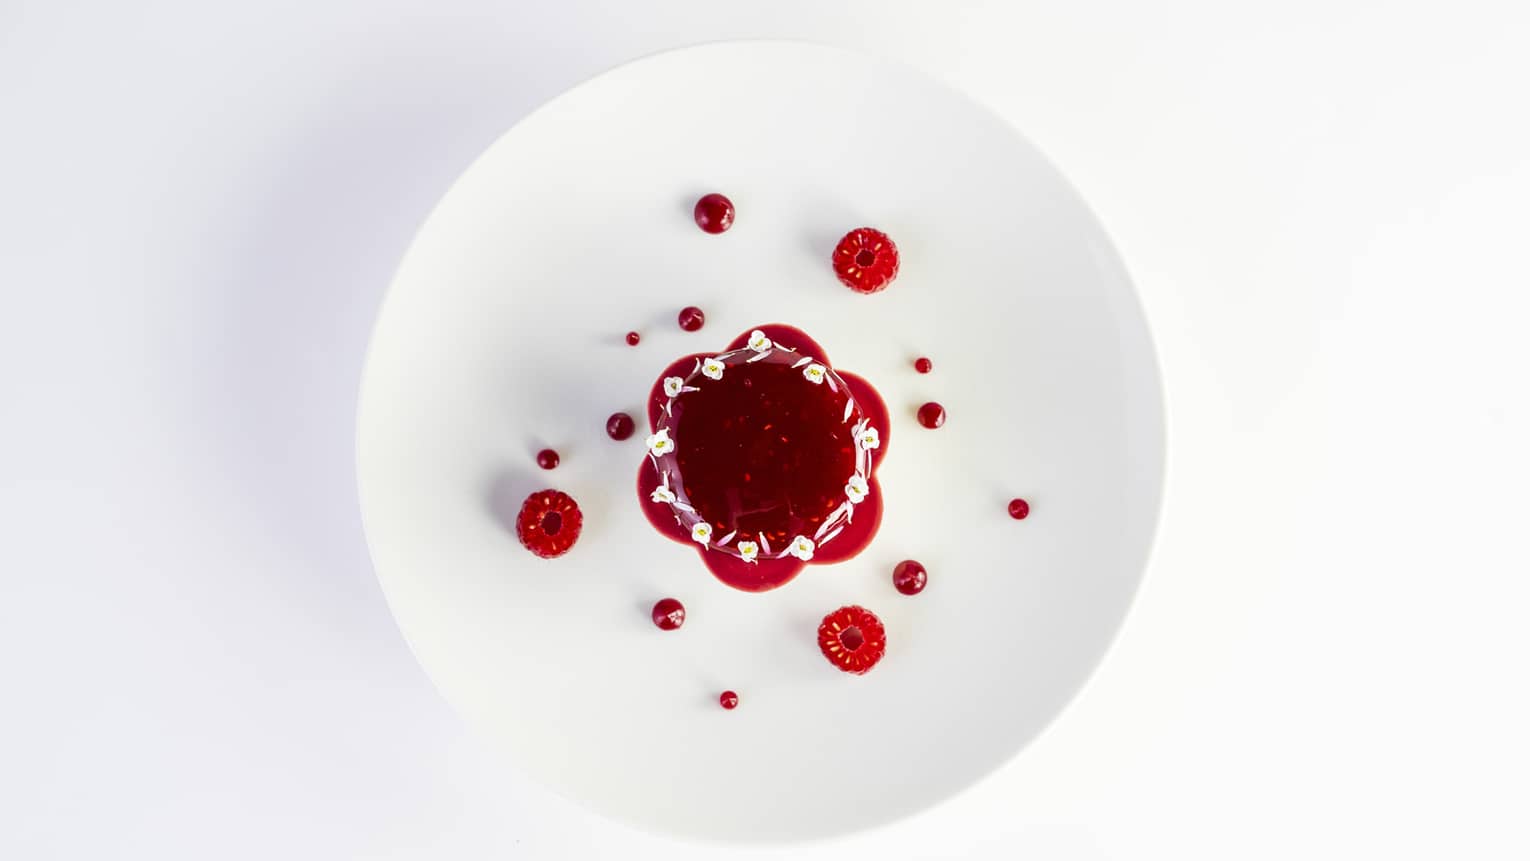 A raspberry dessert on a white plate.